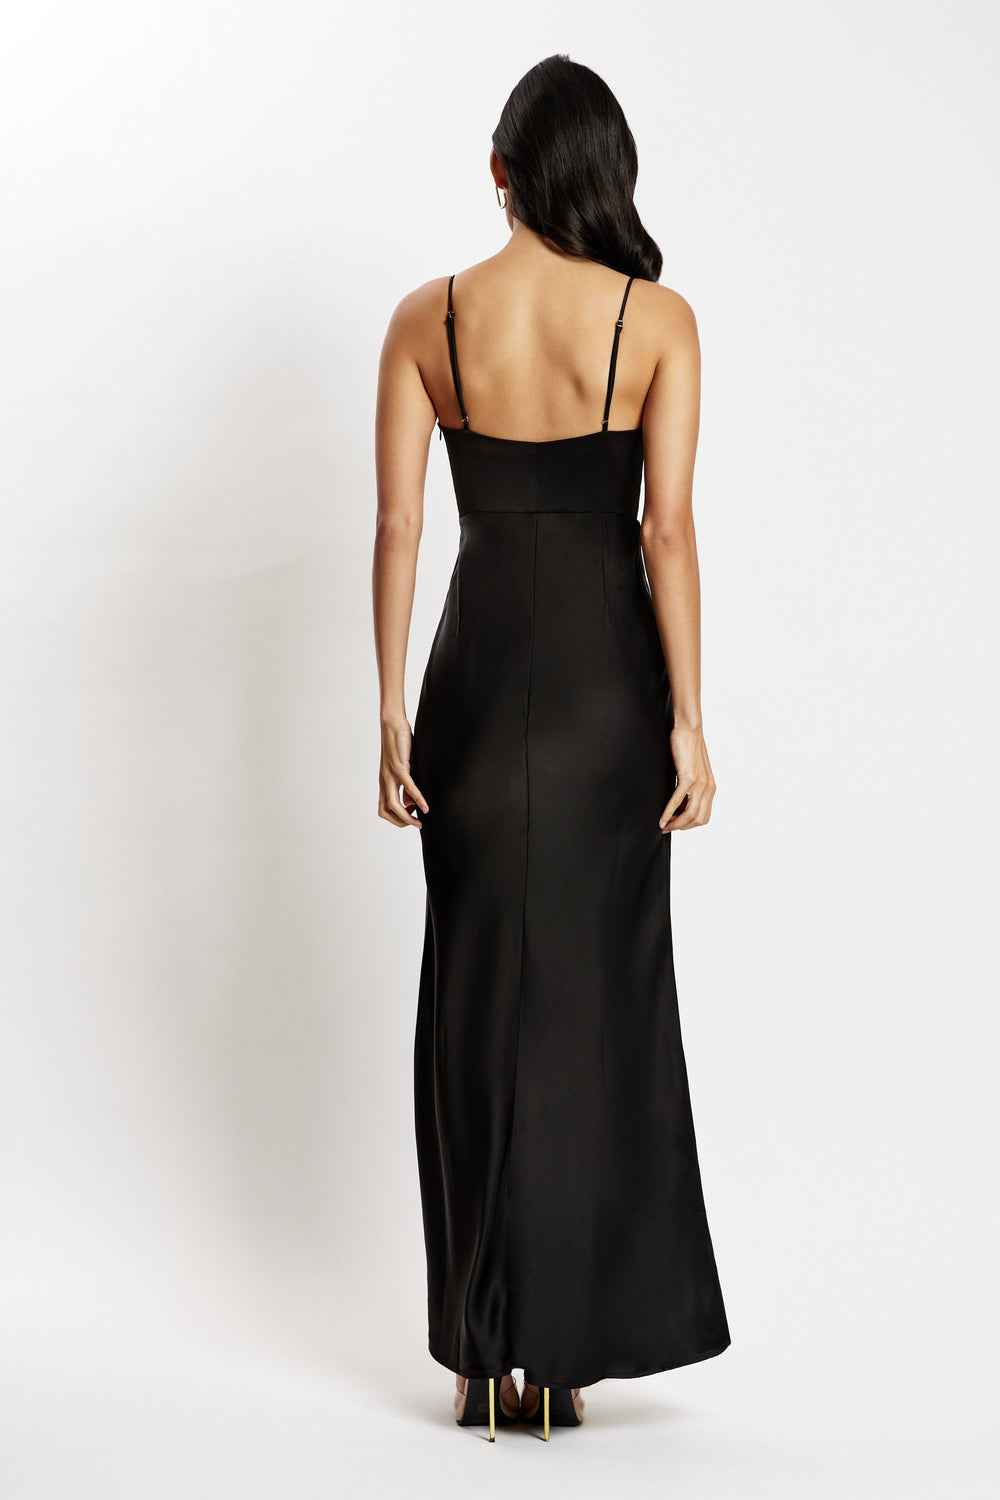 Desirie Corset Maxi Dress - Black